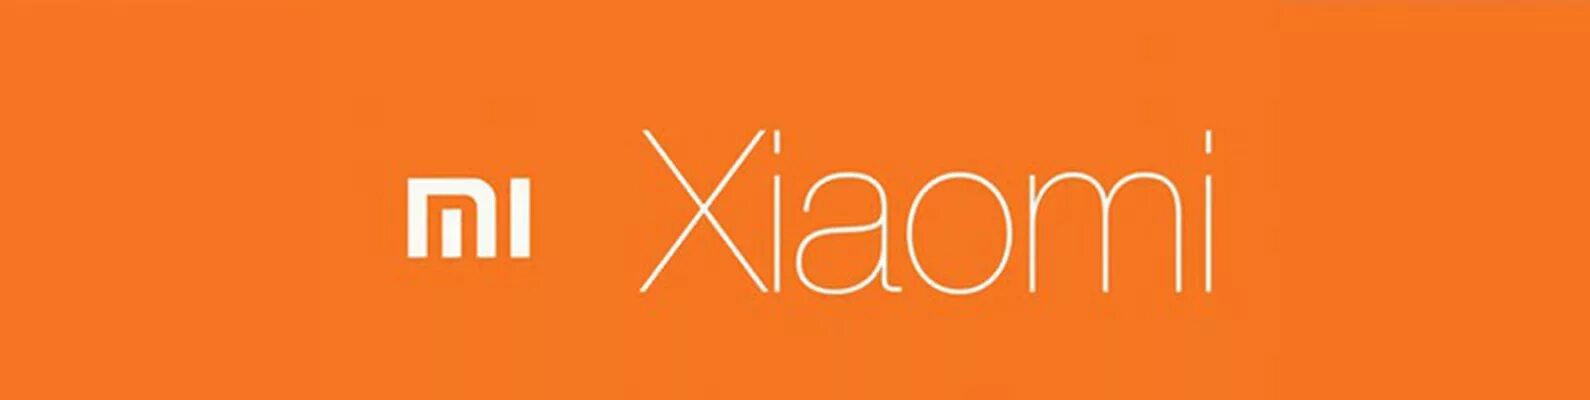 1 mi com. Сяоми бренд. Логотип ксиоми. Xiaomi баннер. Логотип Xiaomi оранжевый.